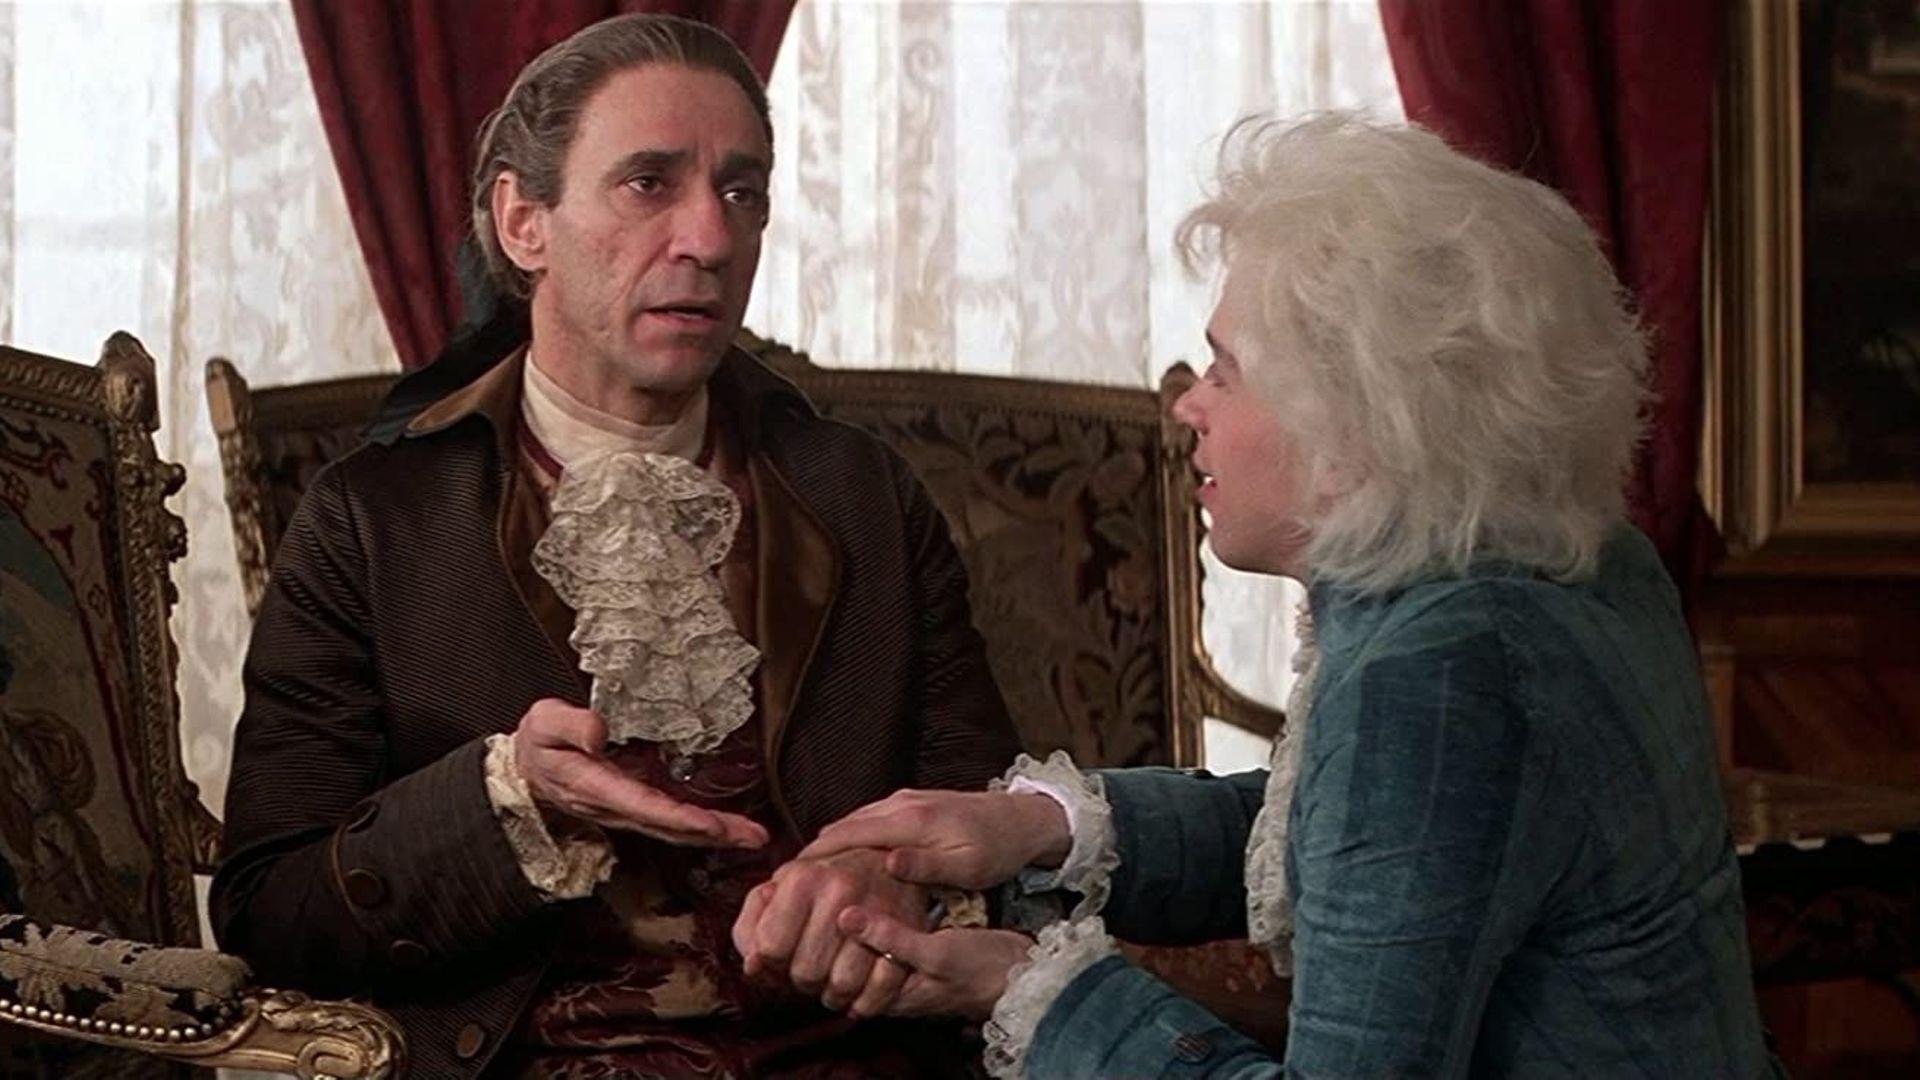 Mozart et Salieri dans le film "Amadeus" de Miloš Forman et Peter Shaffer (1984)